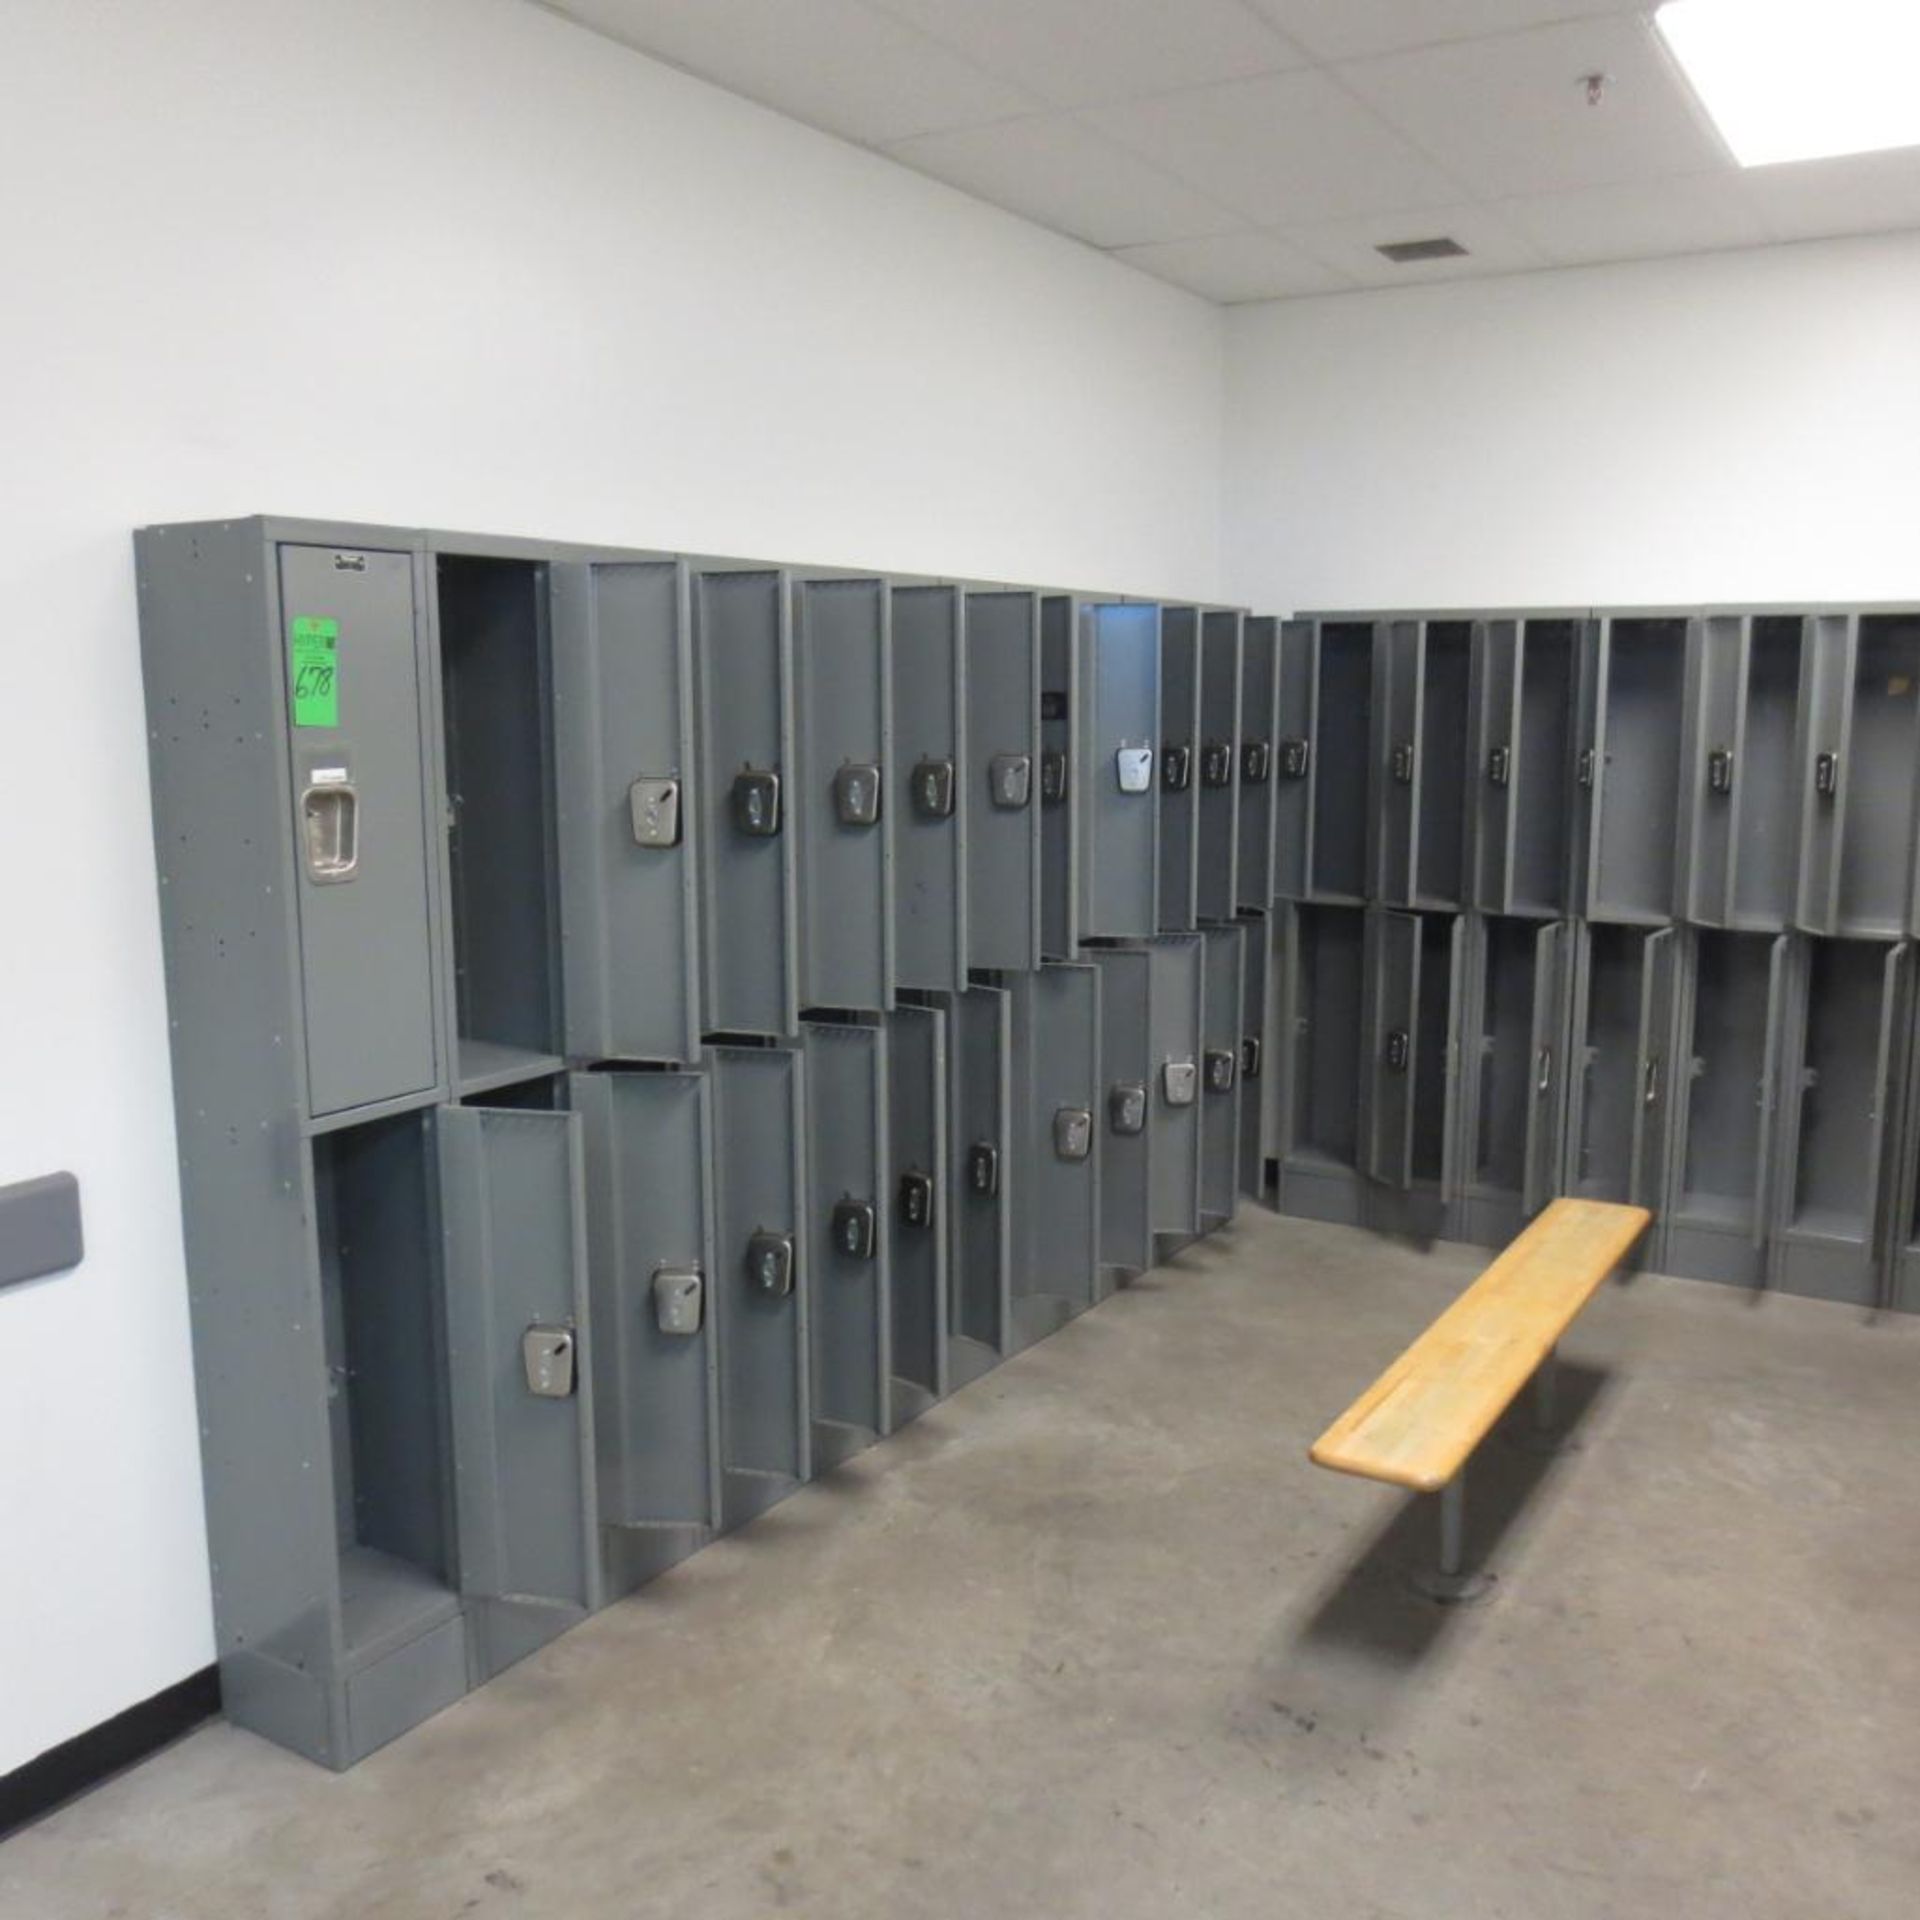 64 Door Locker Unit.**Lot located at 651 N Dekora Woods Blvd., Saukville, WI 53080** - Image 3 of 3